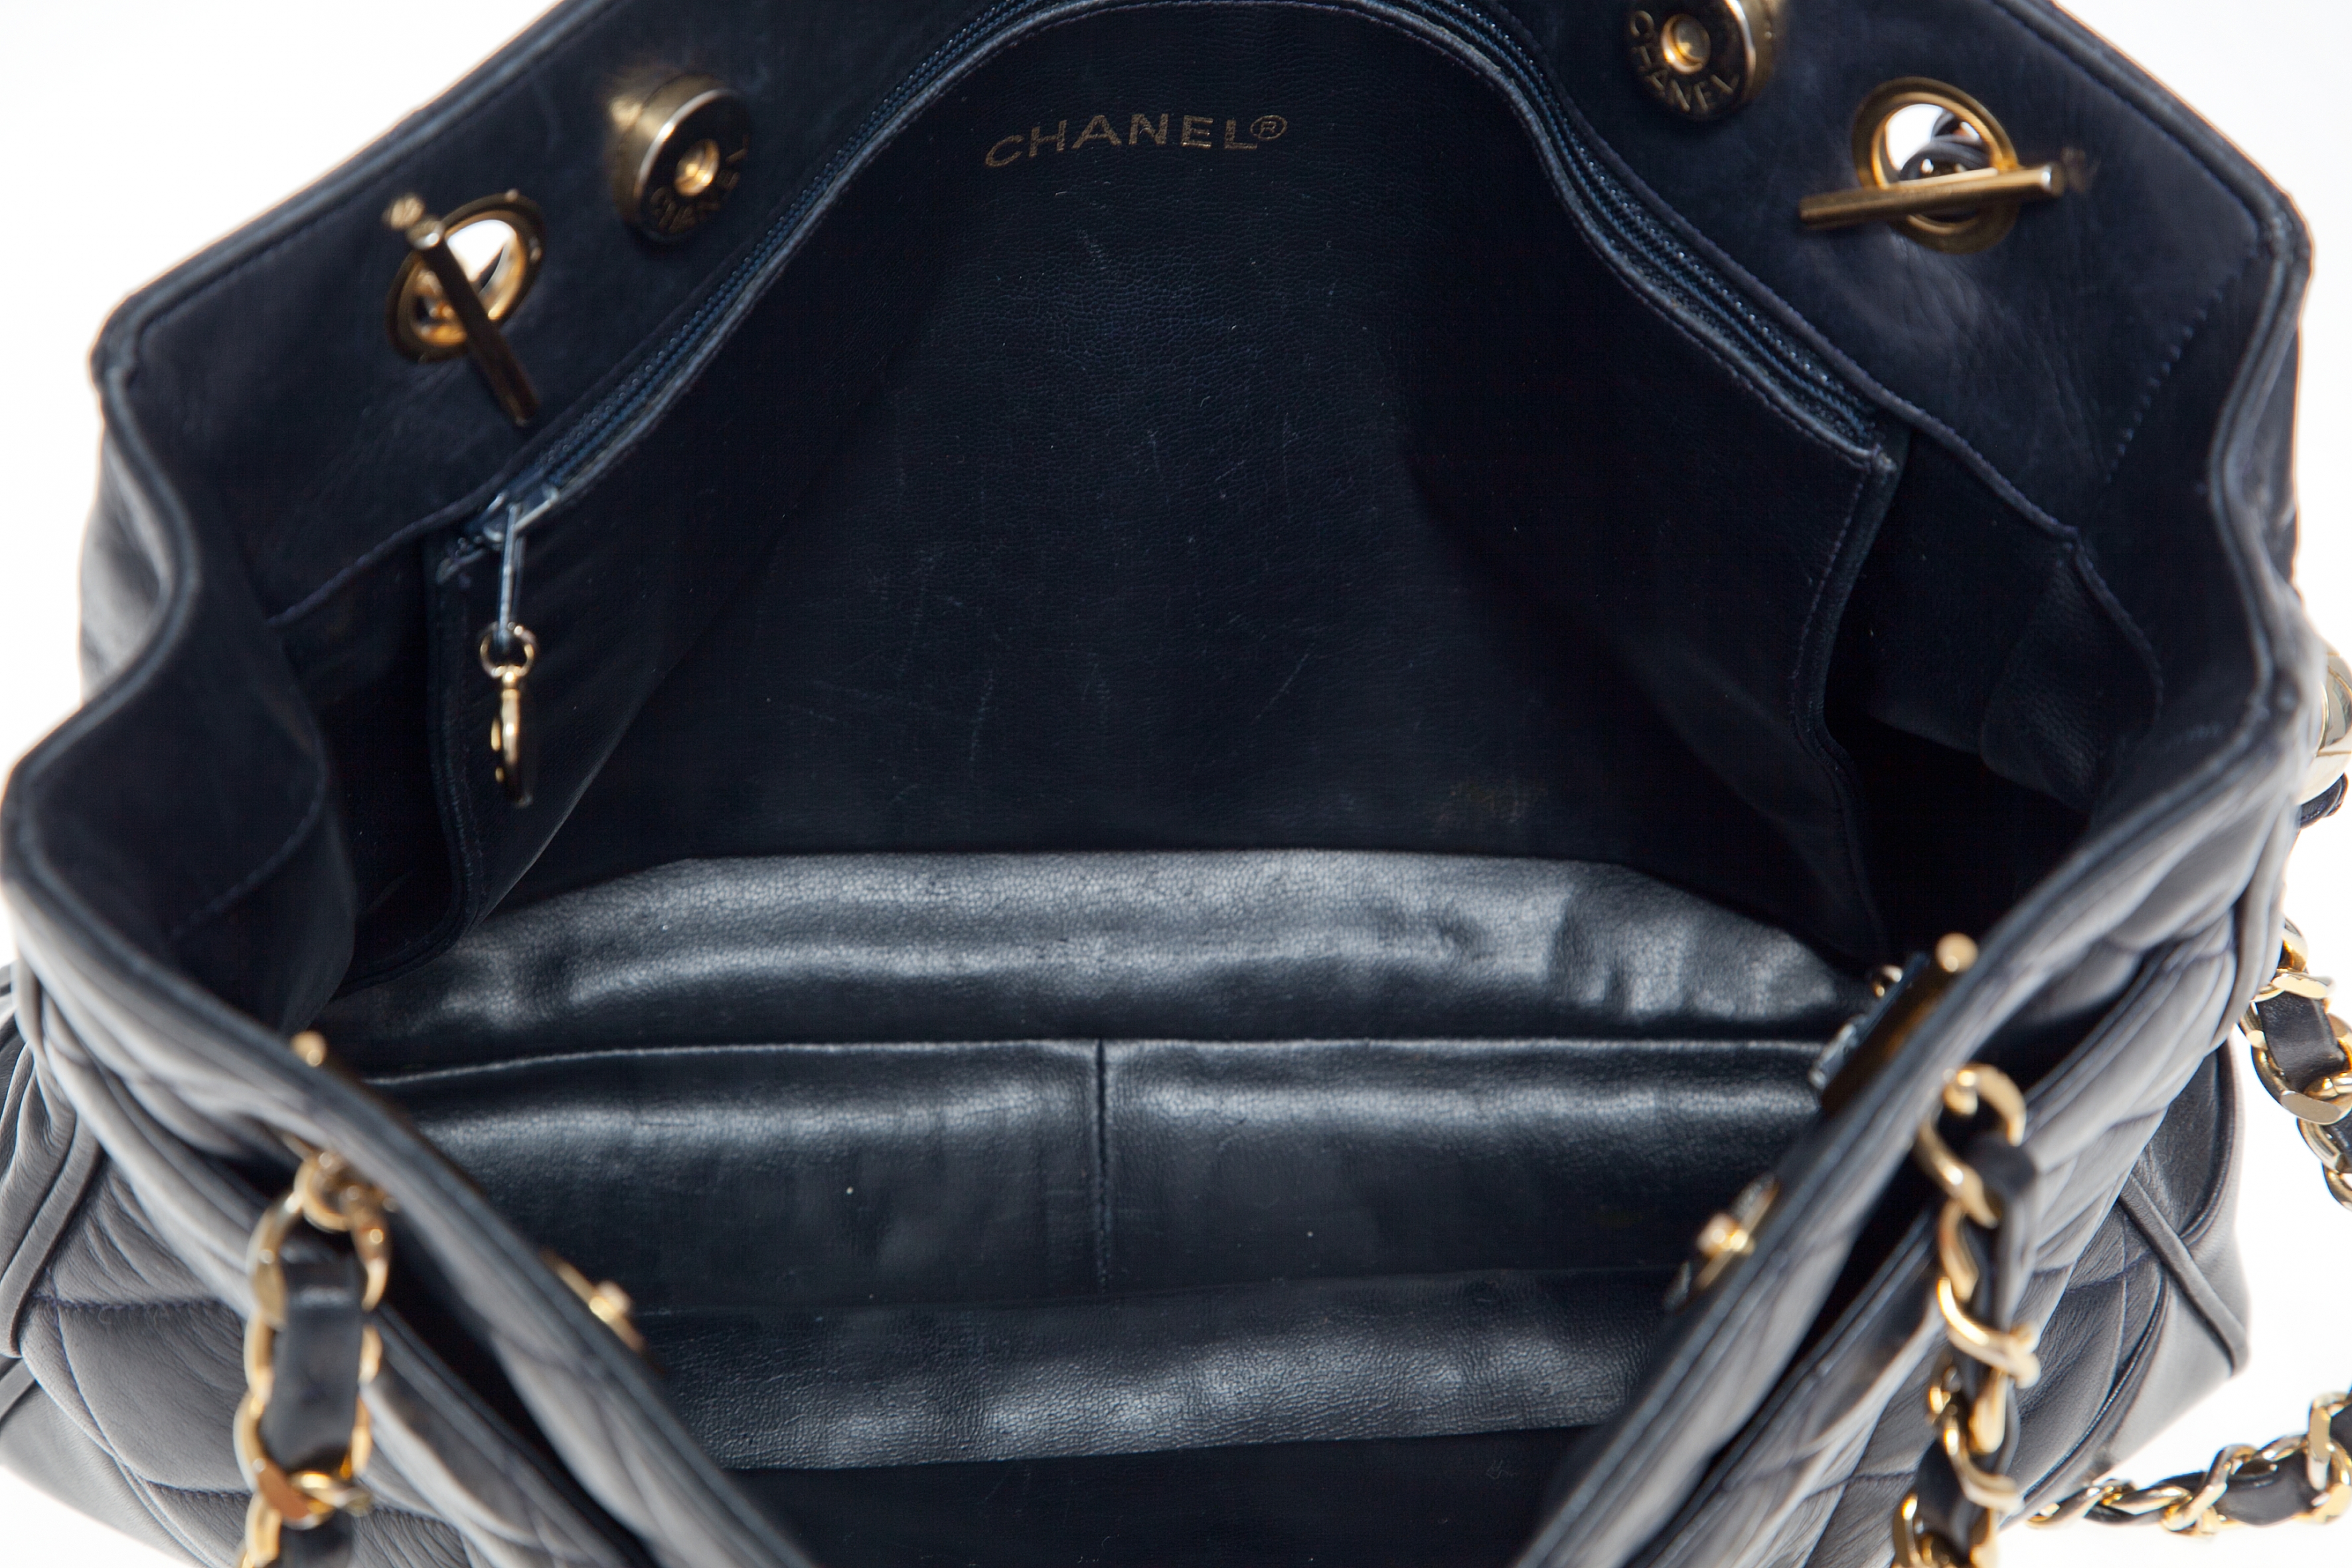 Chanel ”Shopping” dark blue leather | Vintage Shop in Mykonos